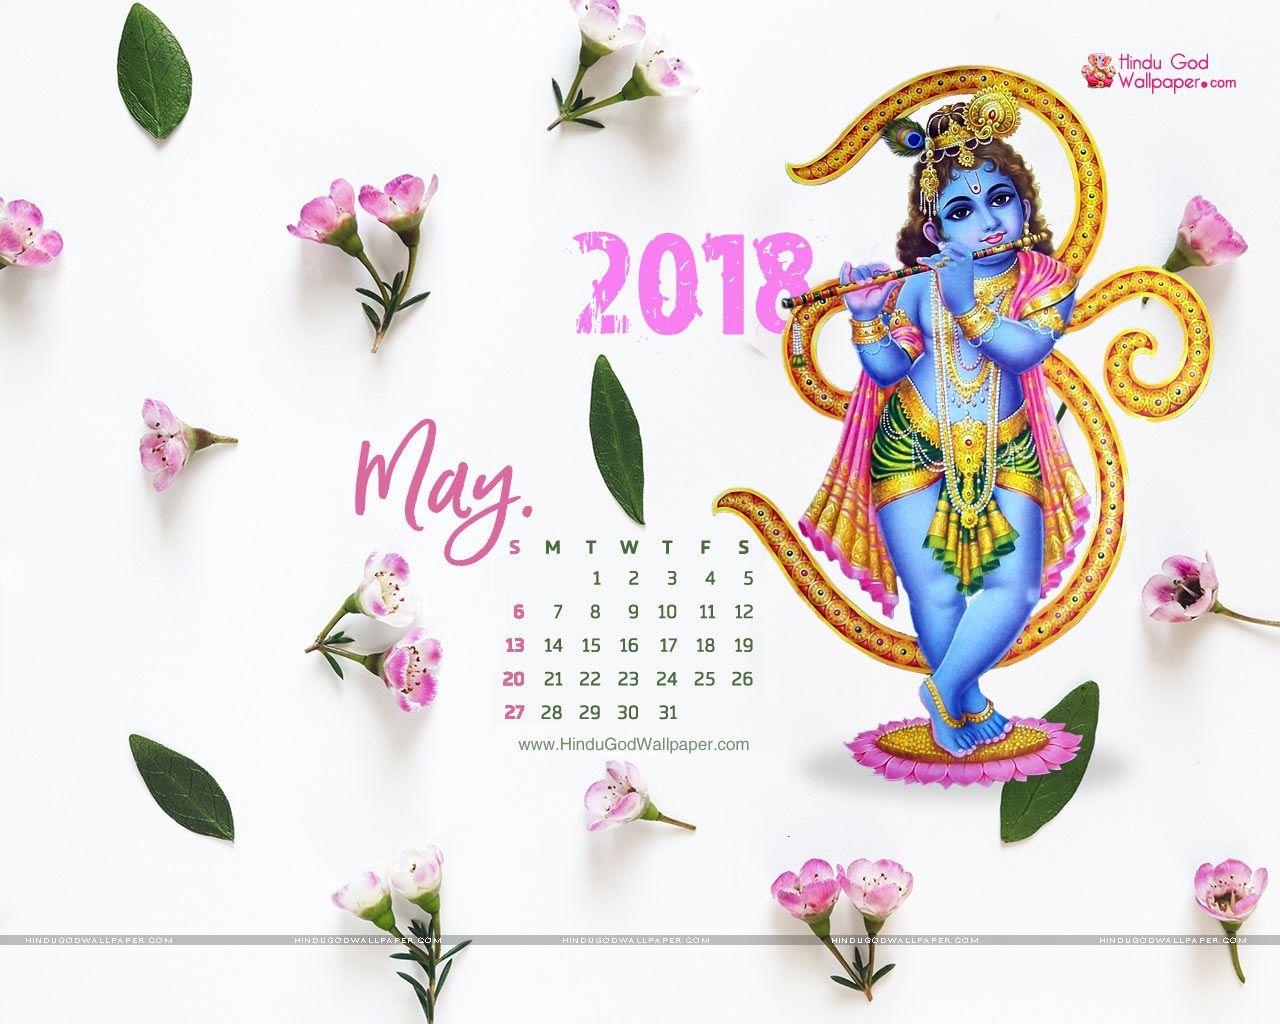 May 2018 Desktop Calendar Wallpaper & HD Background Free Download